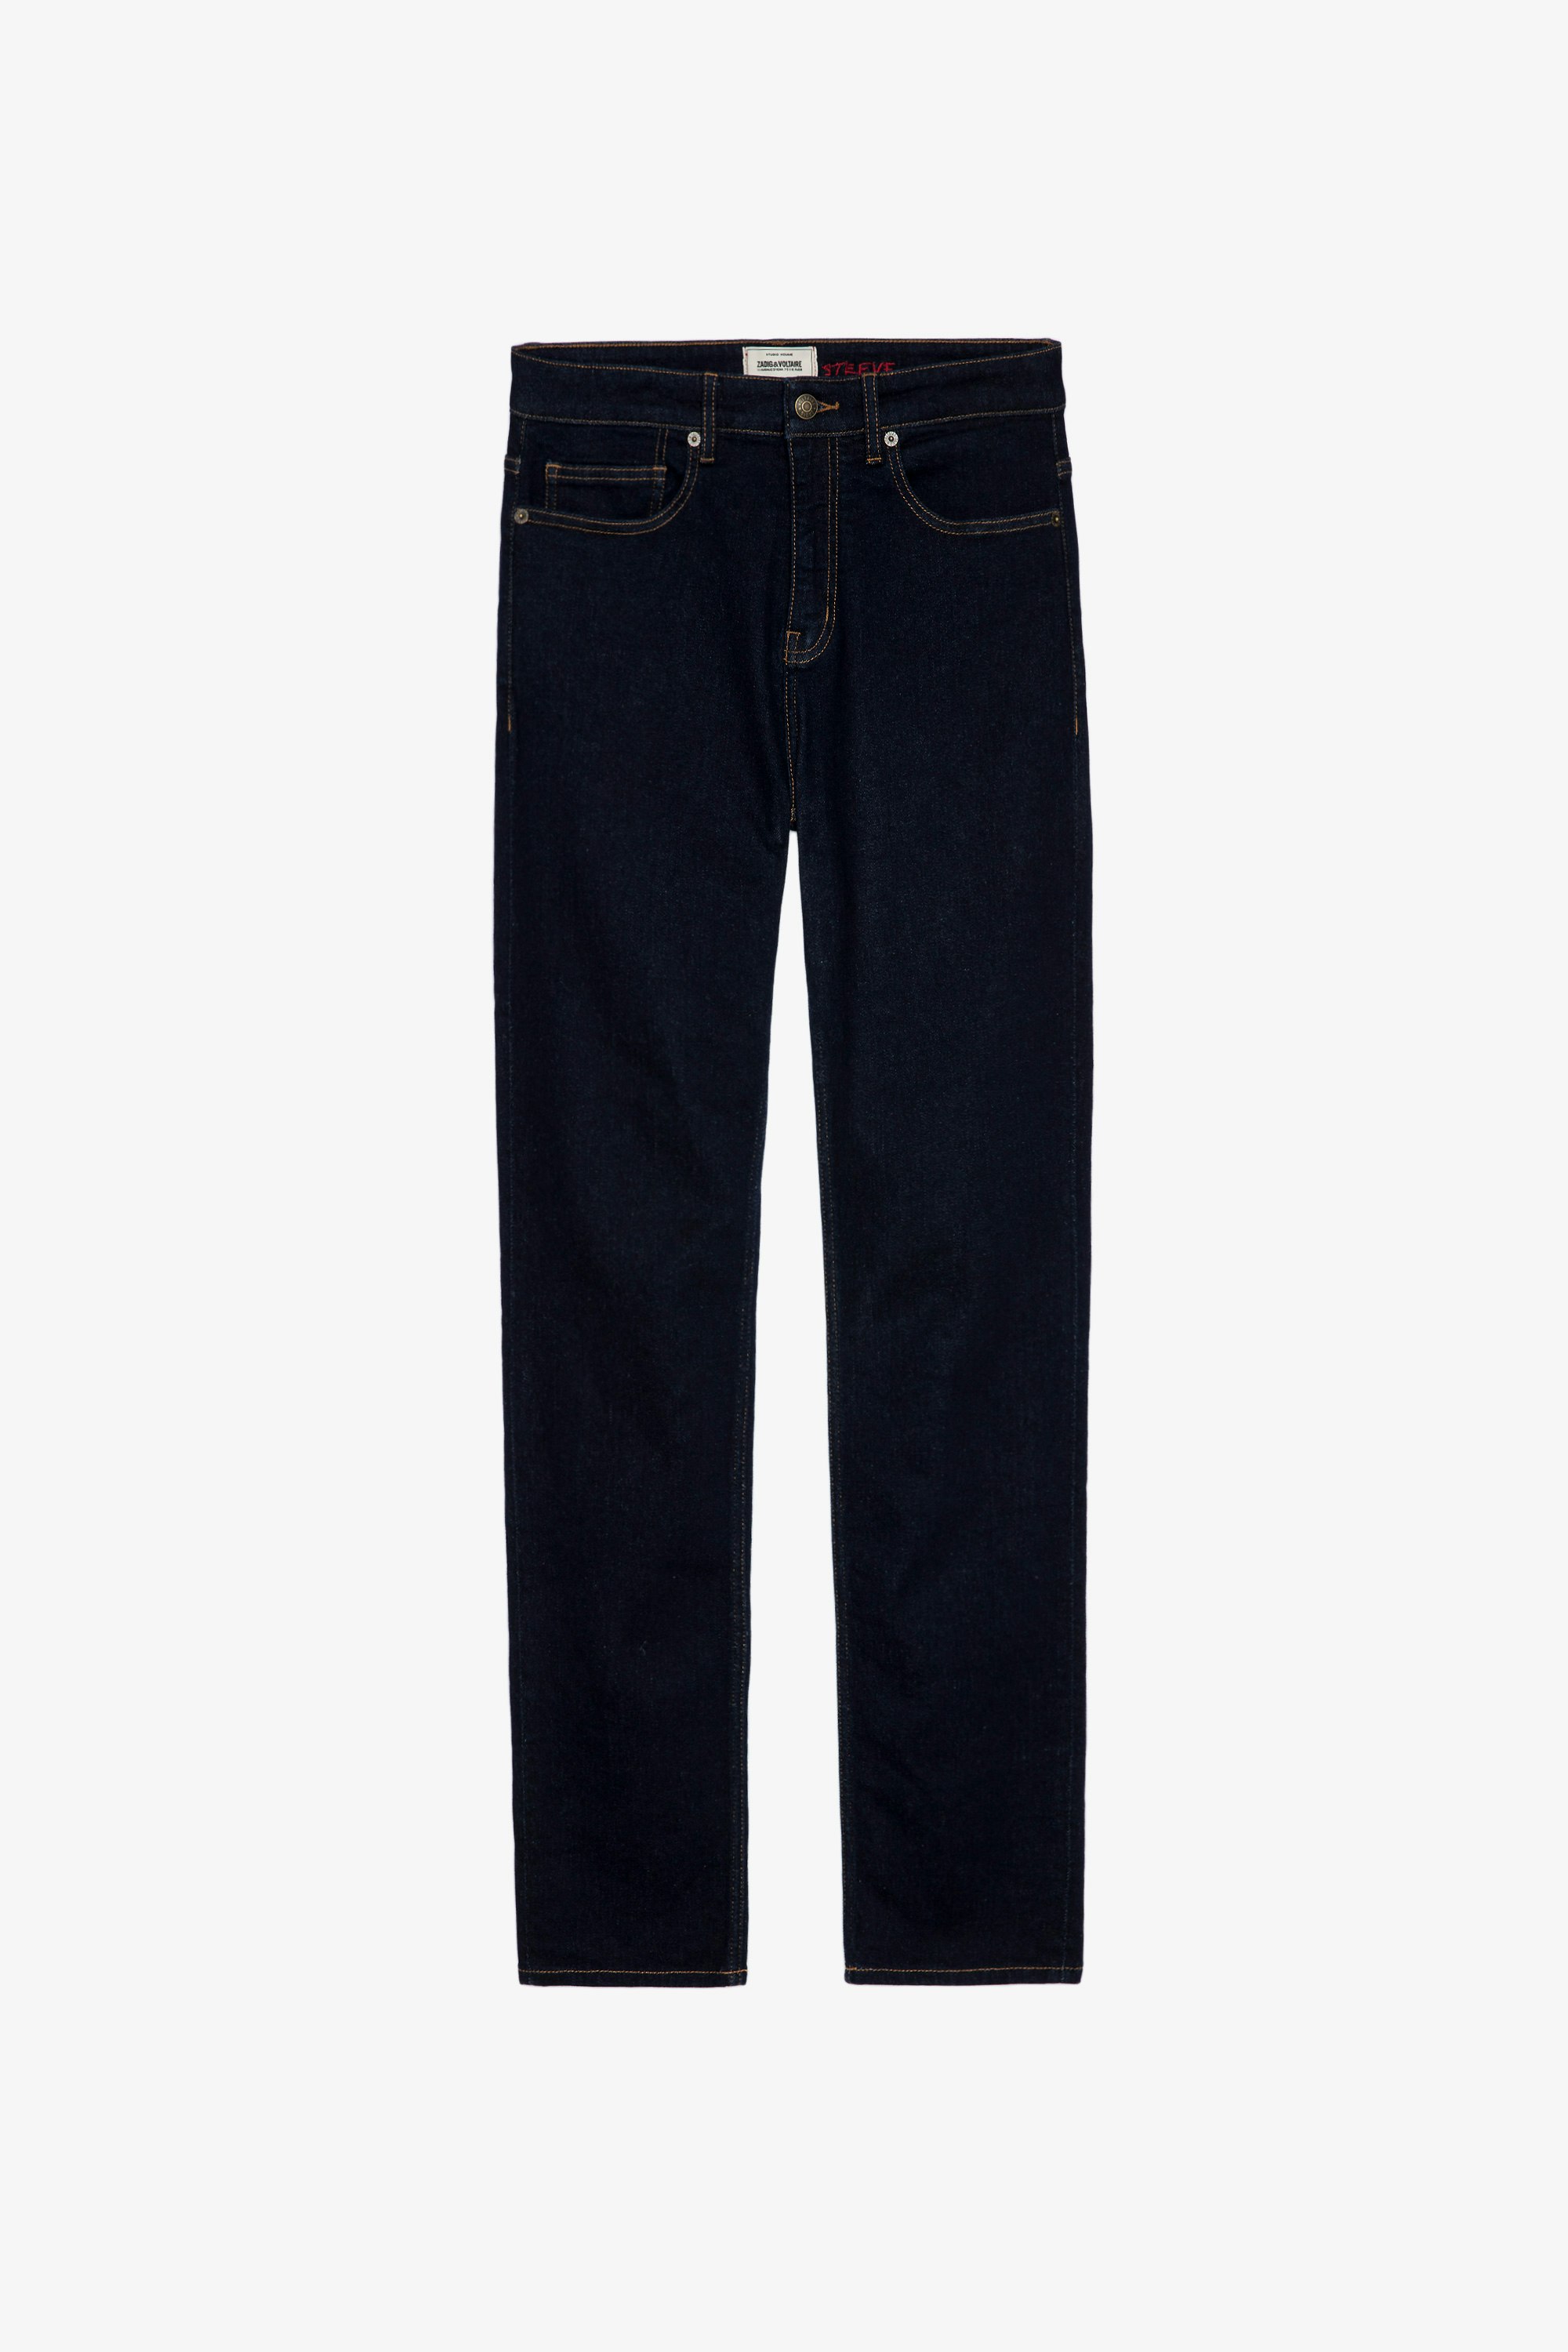 Steeve Jeans - Men’s regular-fit raw denim jeans